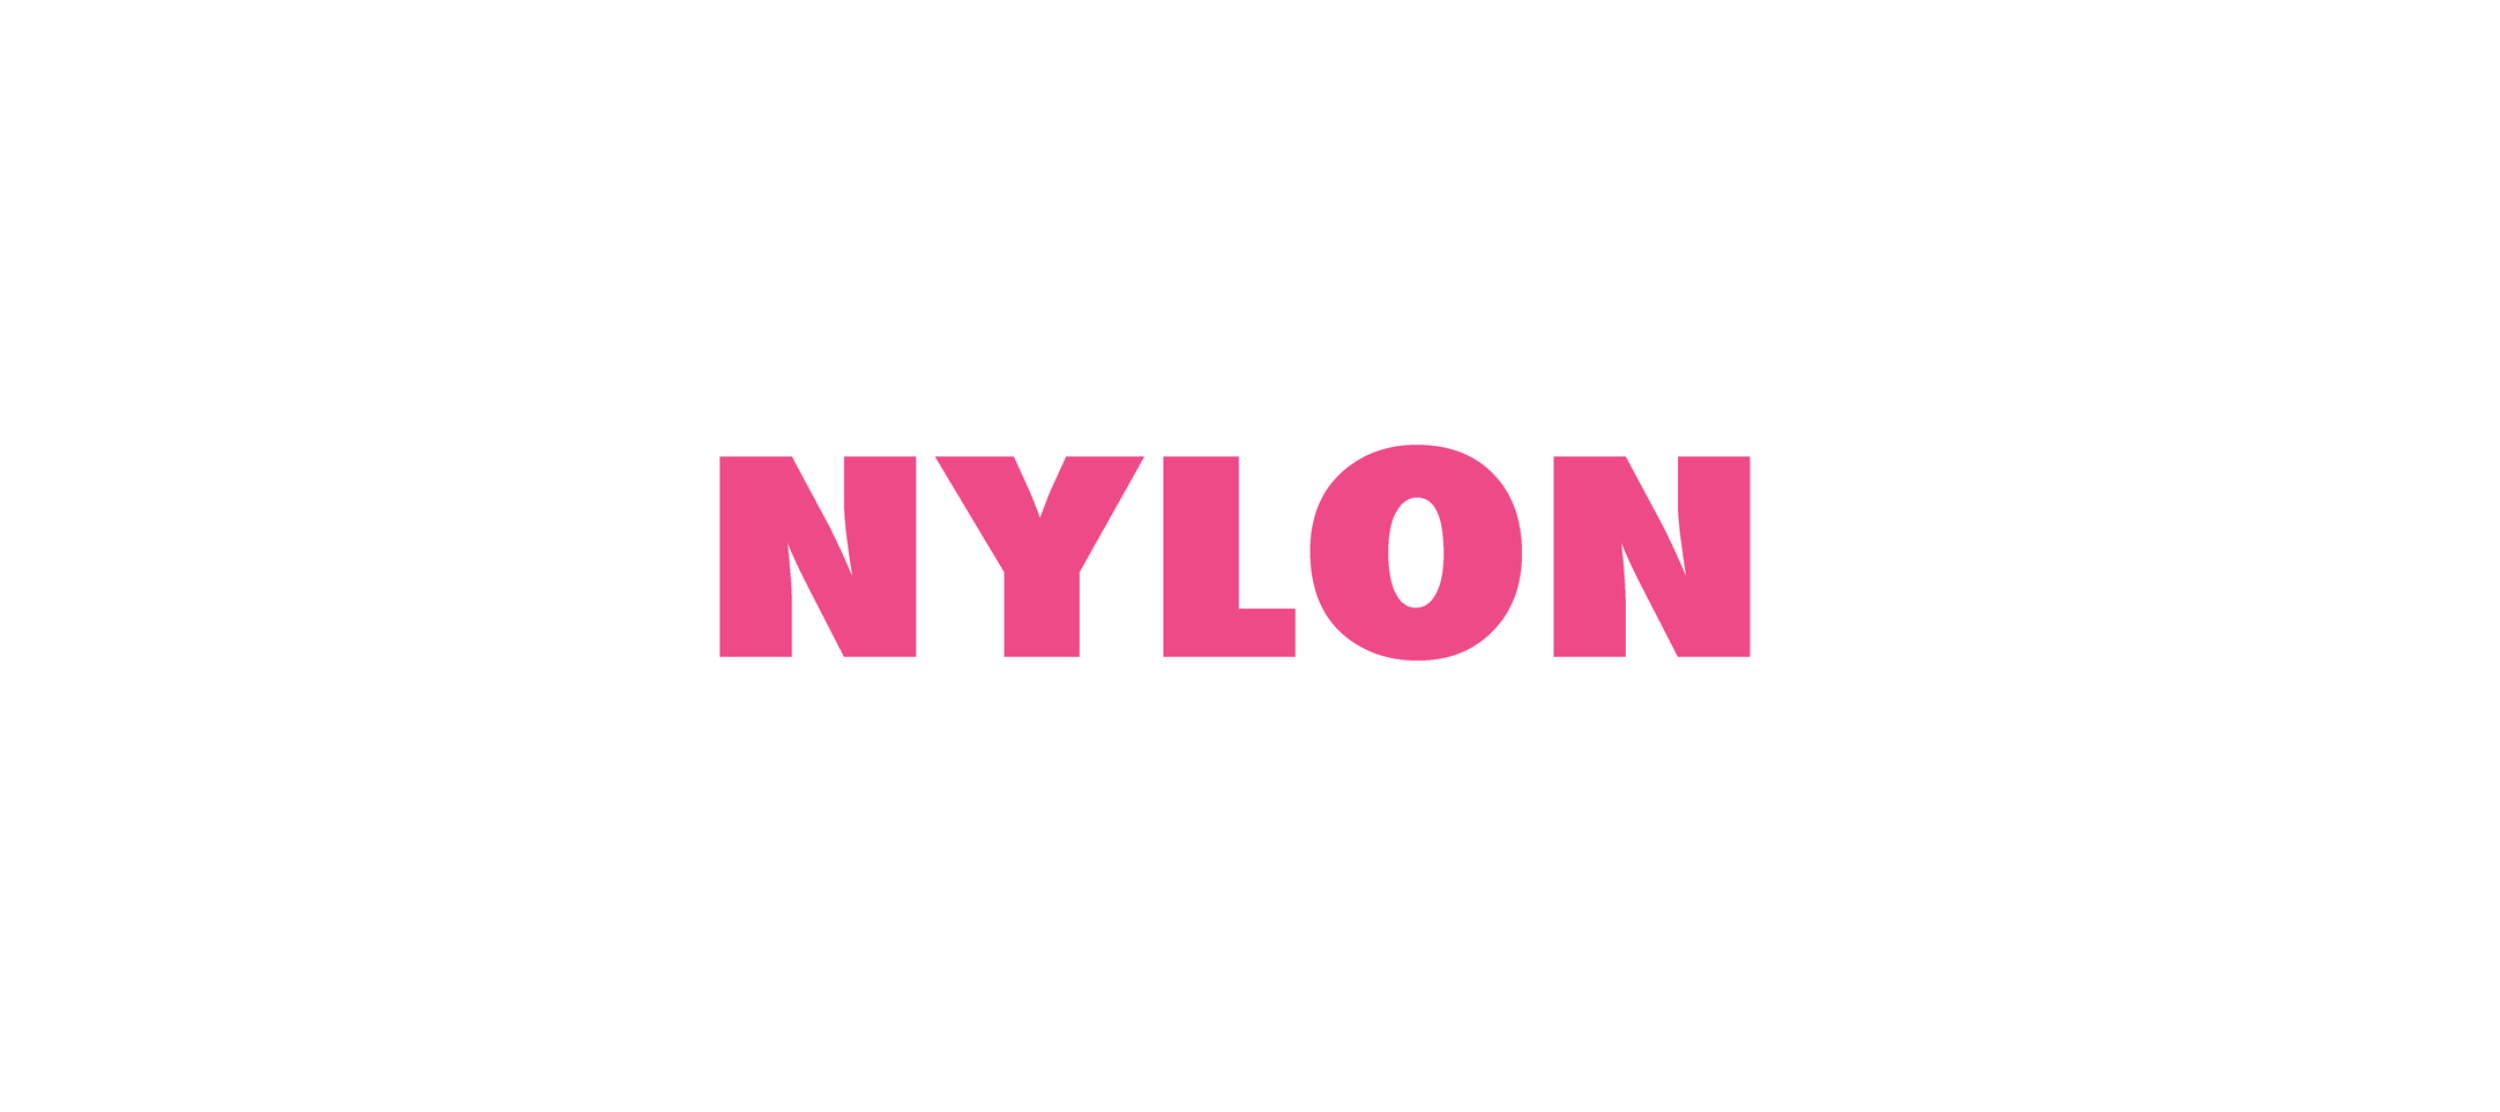 Nylon Logo - nylon - Licensing Corner